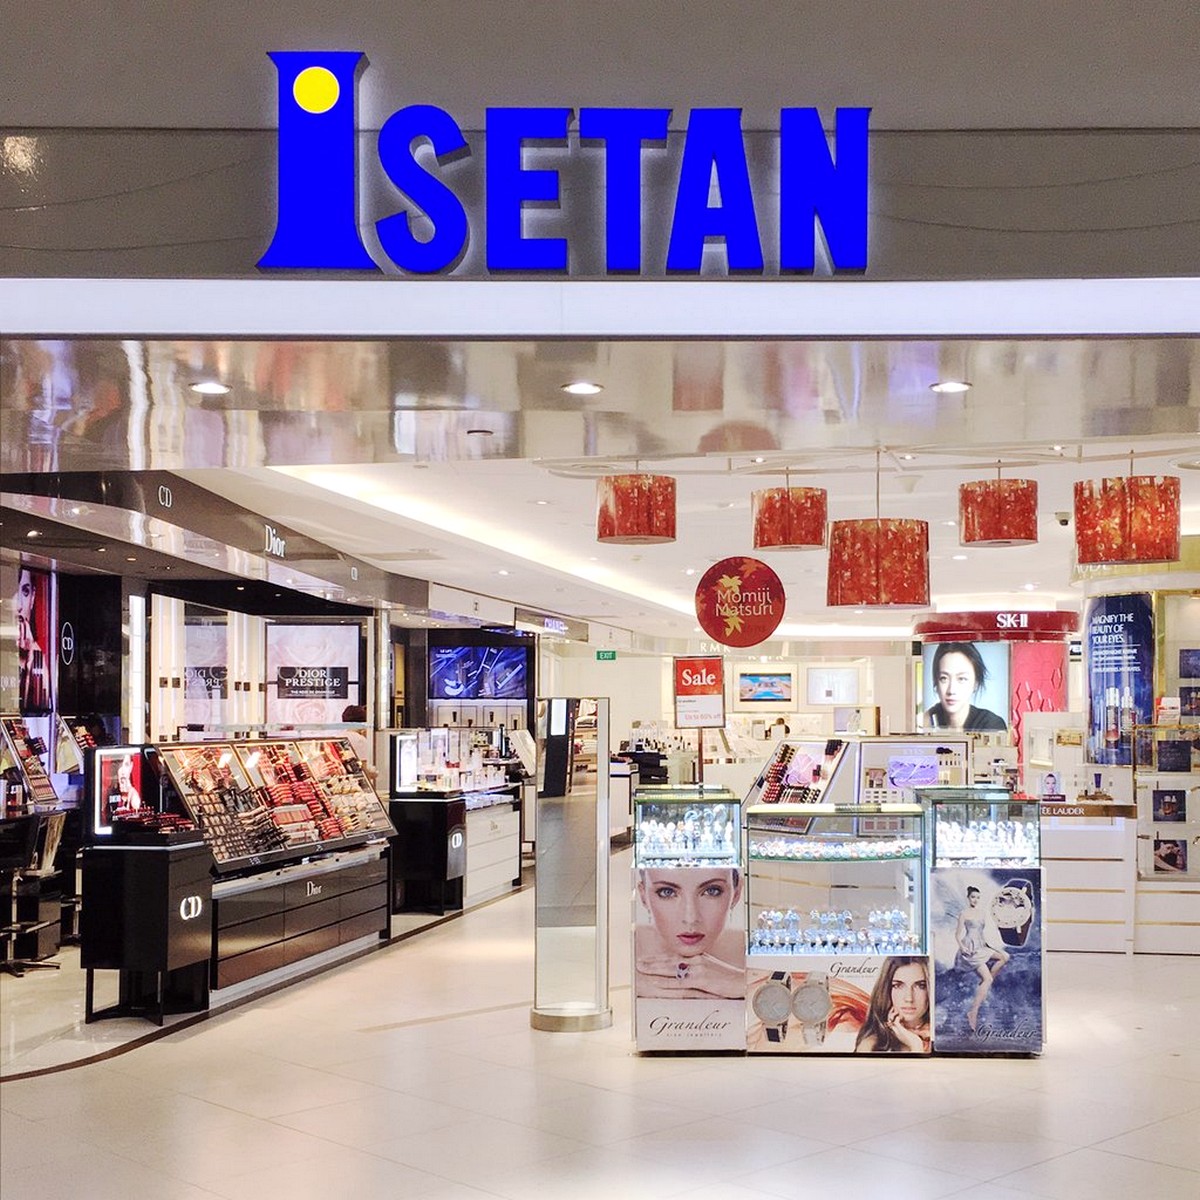 Nex_1017_1024x1024 21-24 Feb 2021: ISETAN Sports Sale at Serangoon Central up to 70% OFF